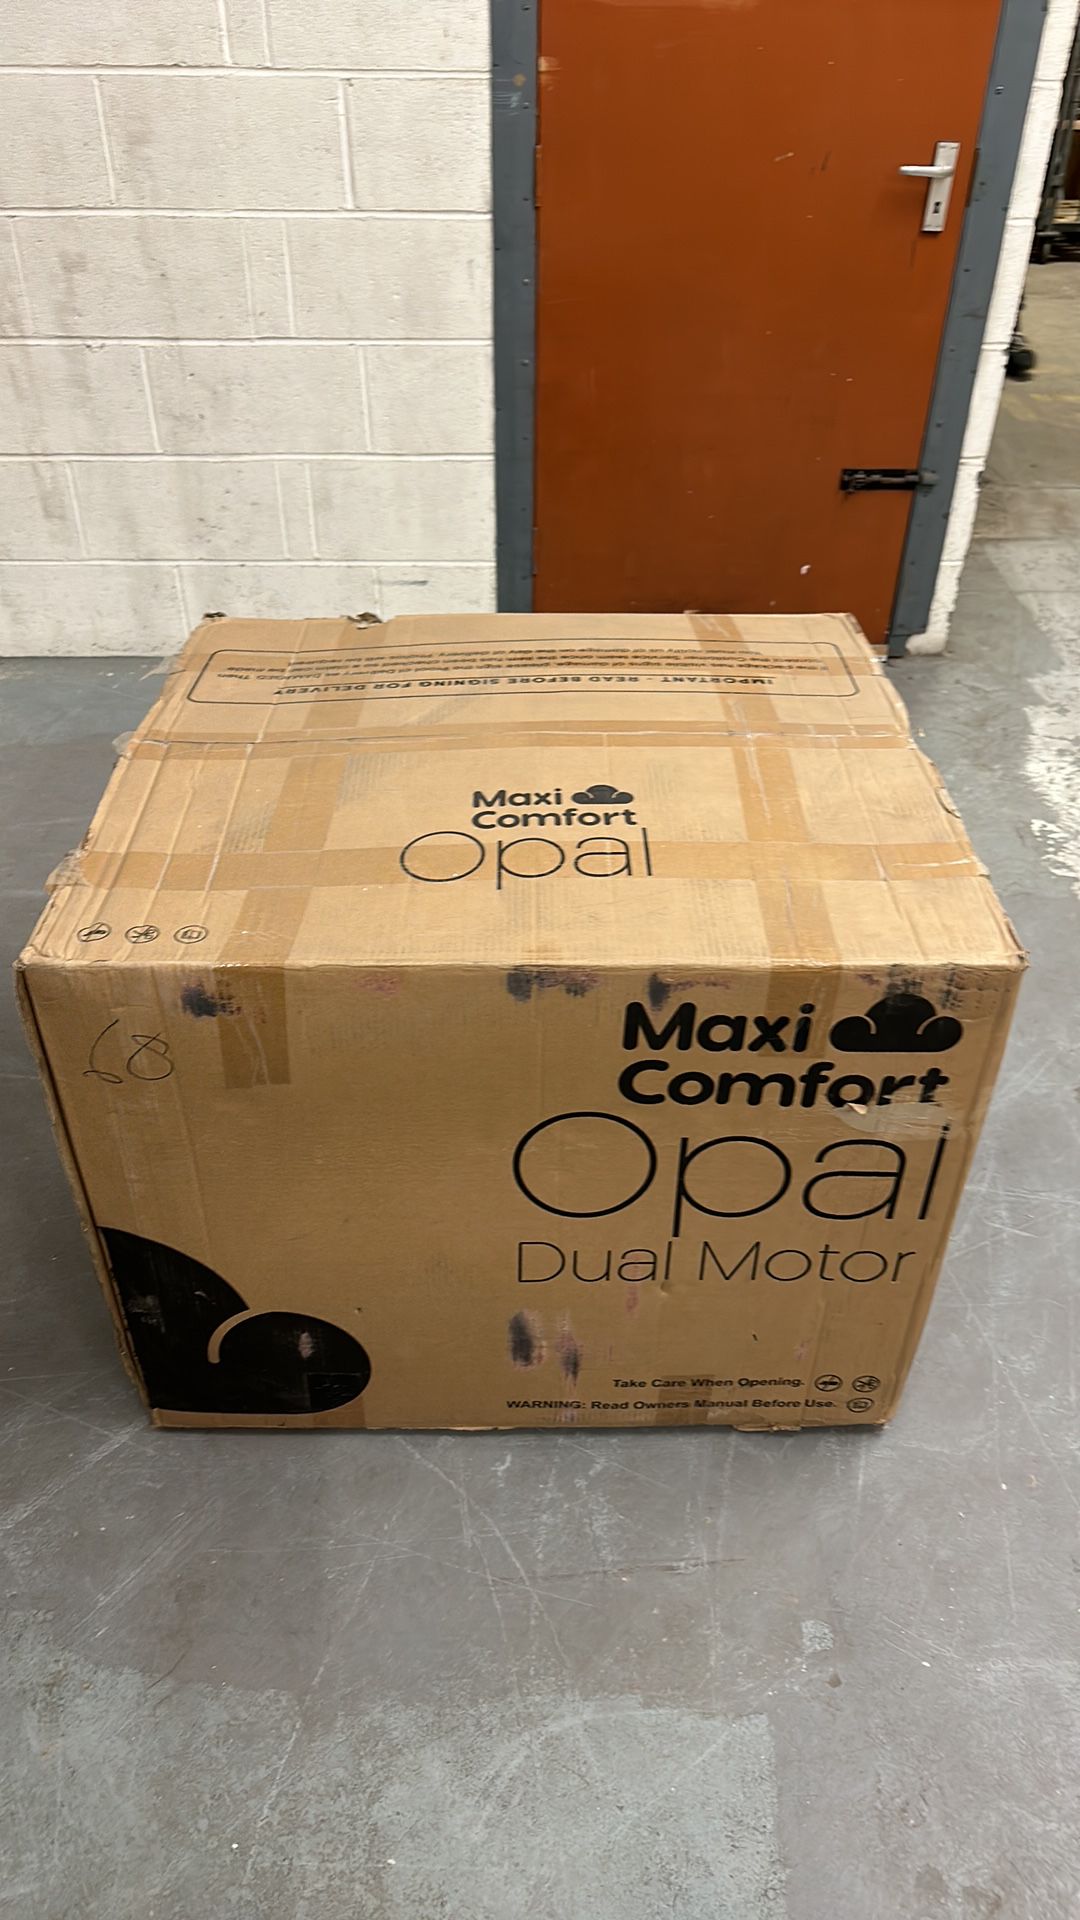 Maxi Comfort Opal - Dual Motor - Image 3 of 8